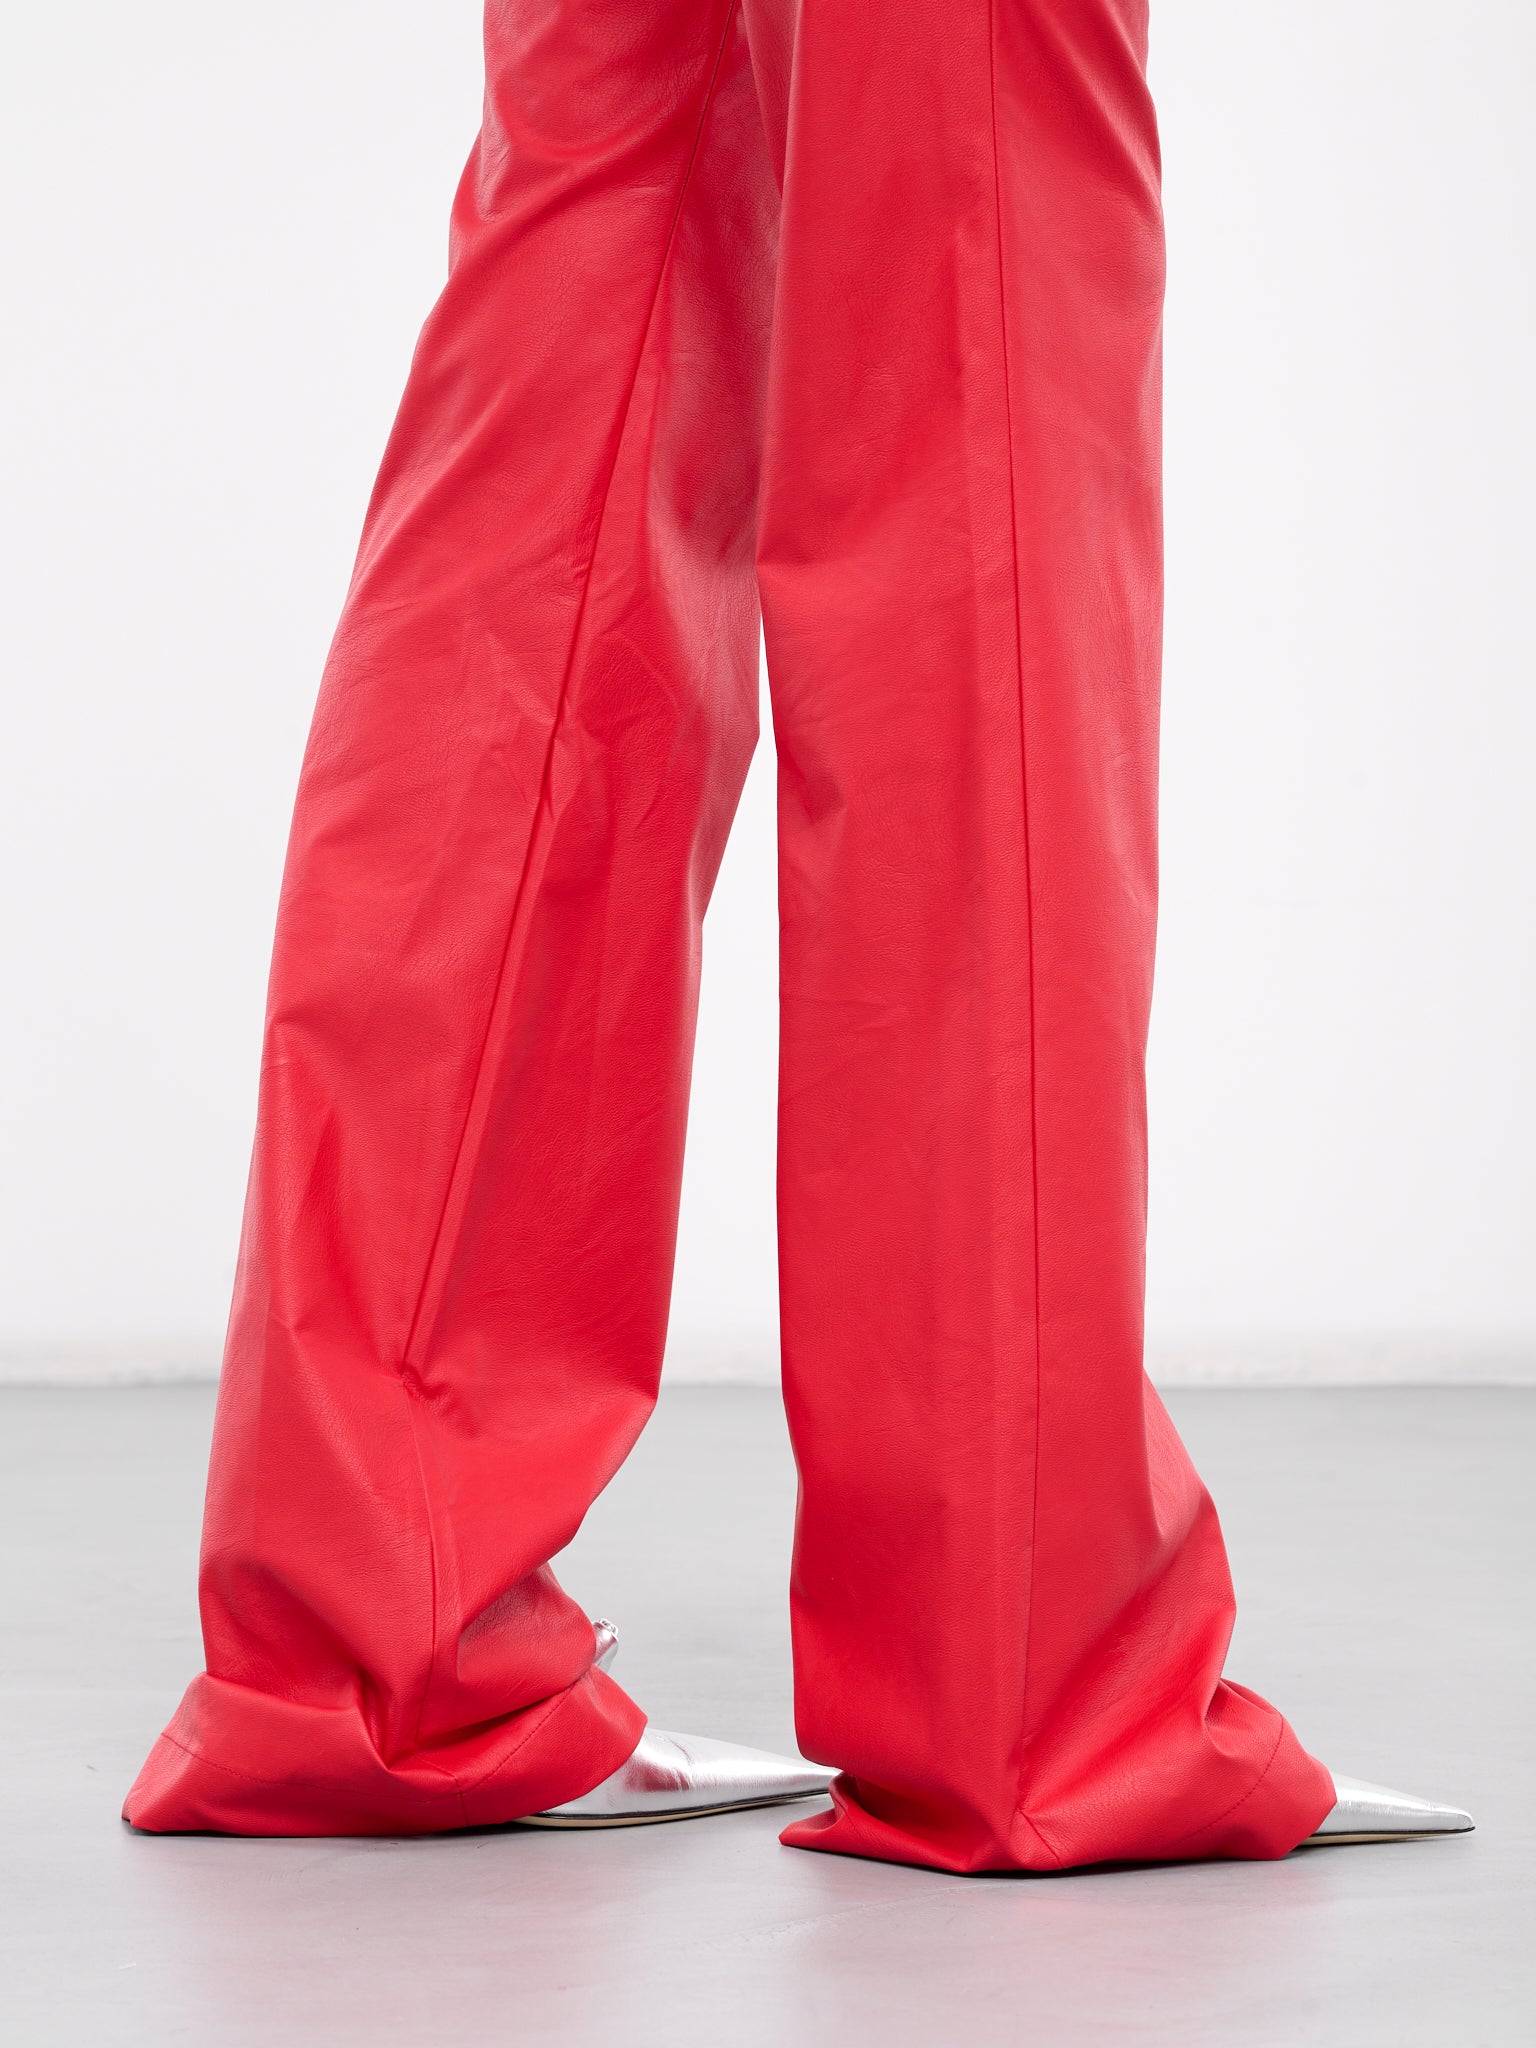 Faux Leather Lace-Up Pants (FAUX-LTHR-PANTS-SPARKLY-RED)